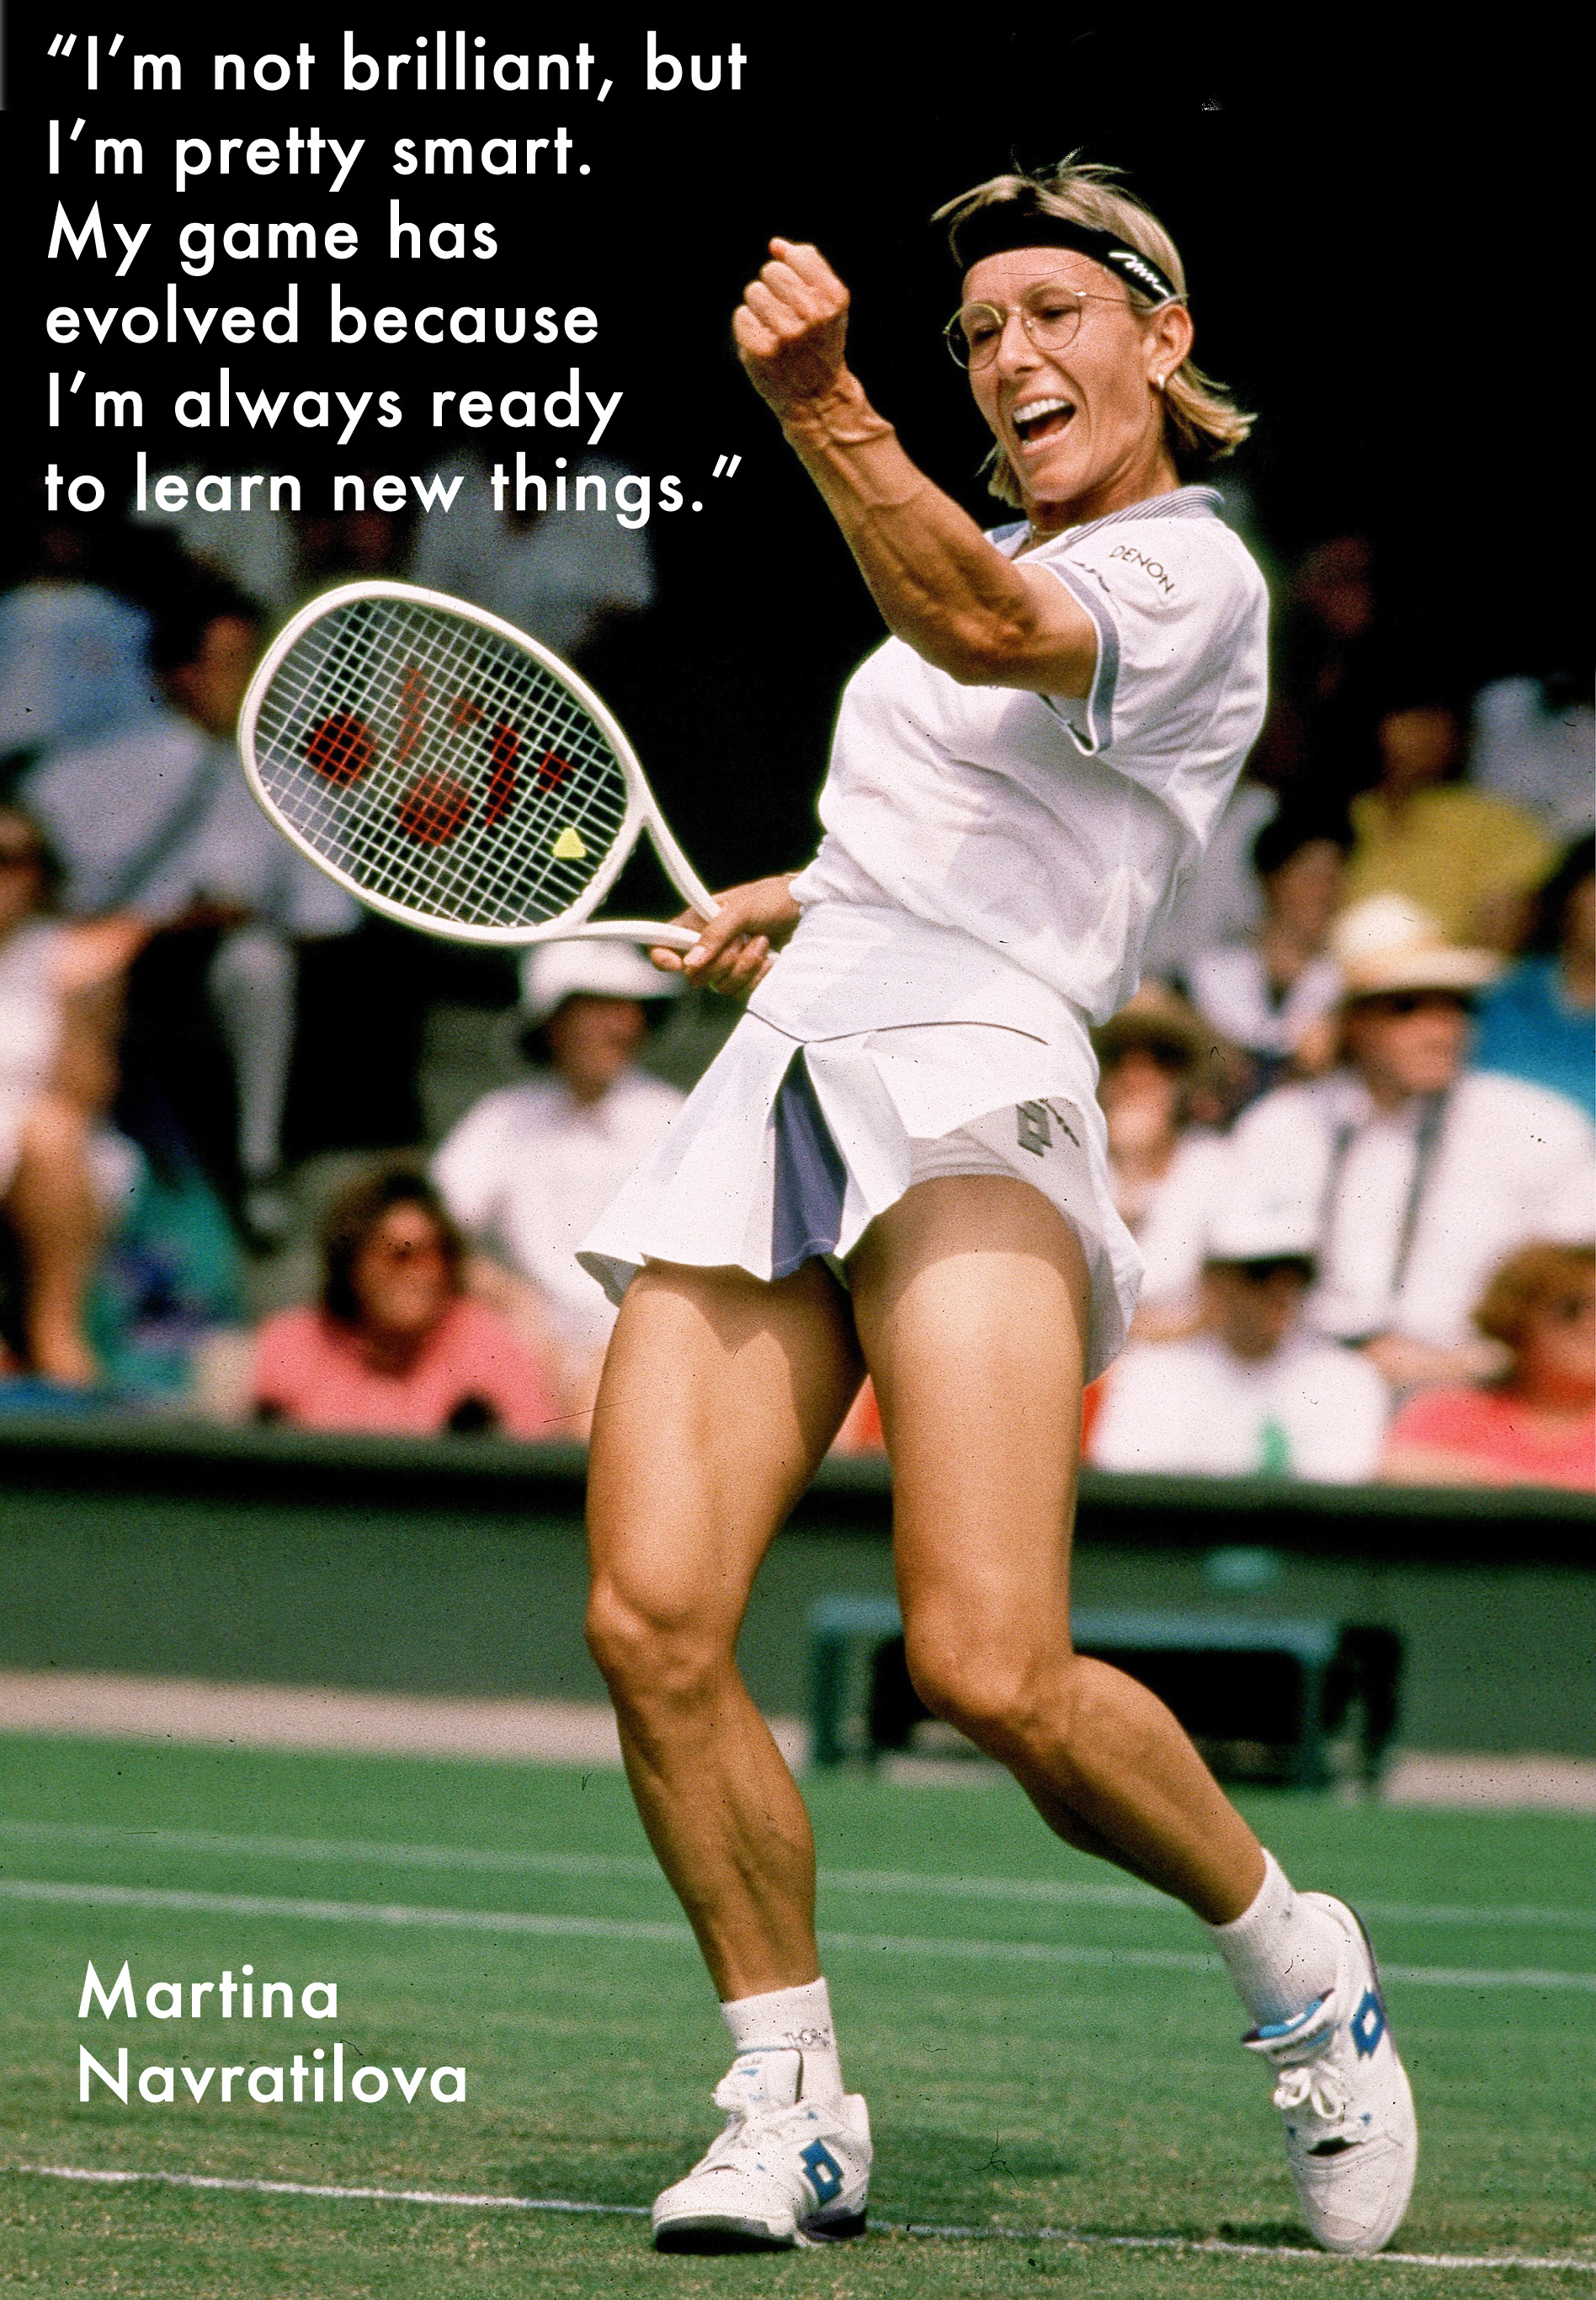 Martina Navratilova's quote #5